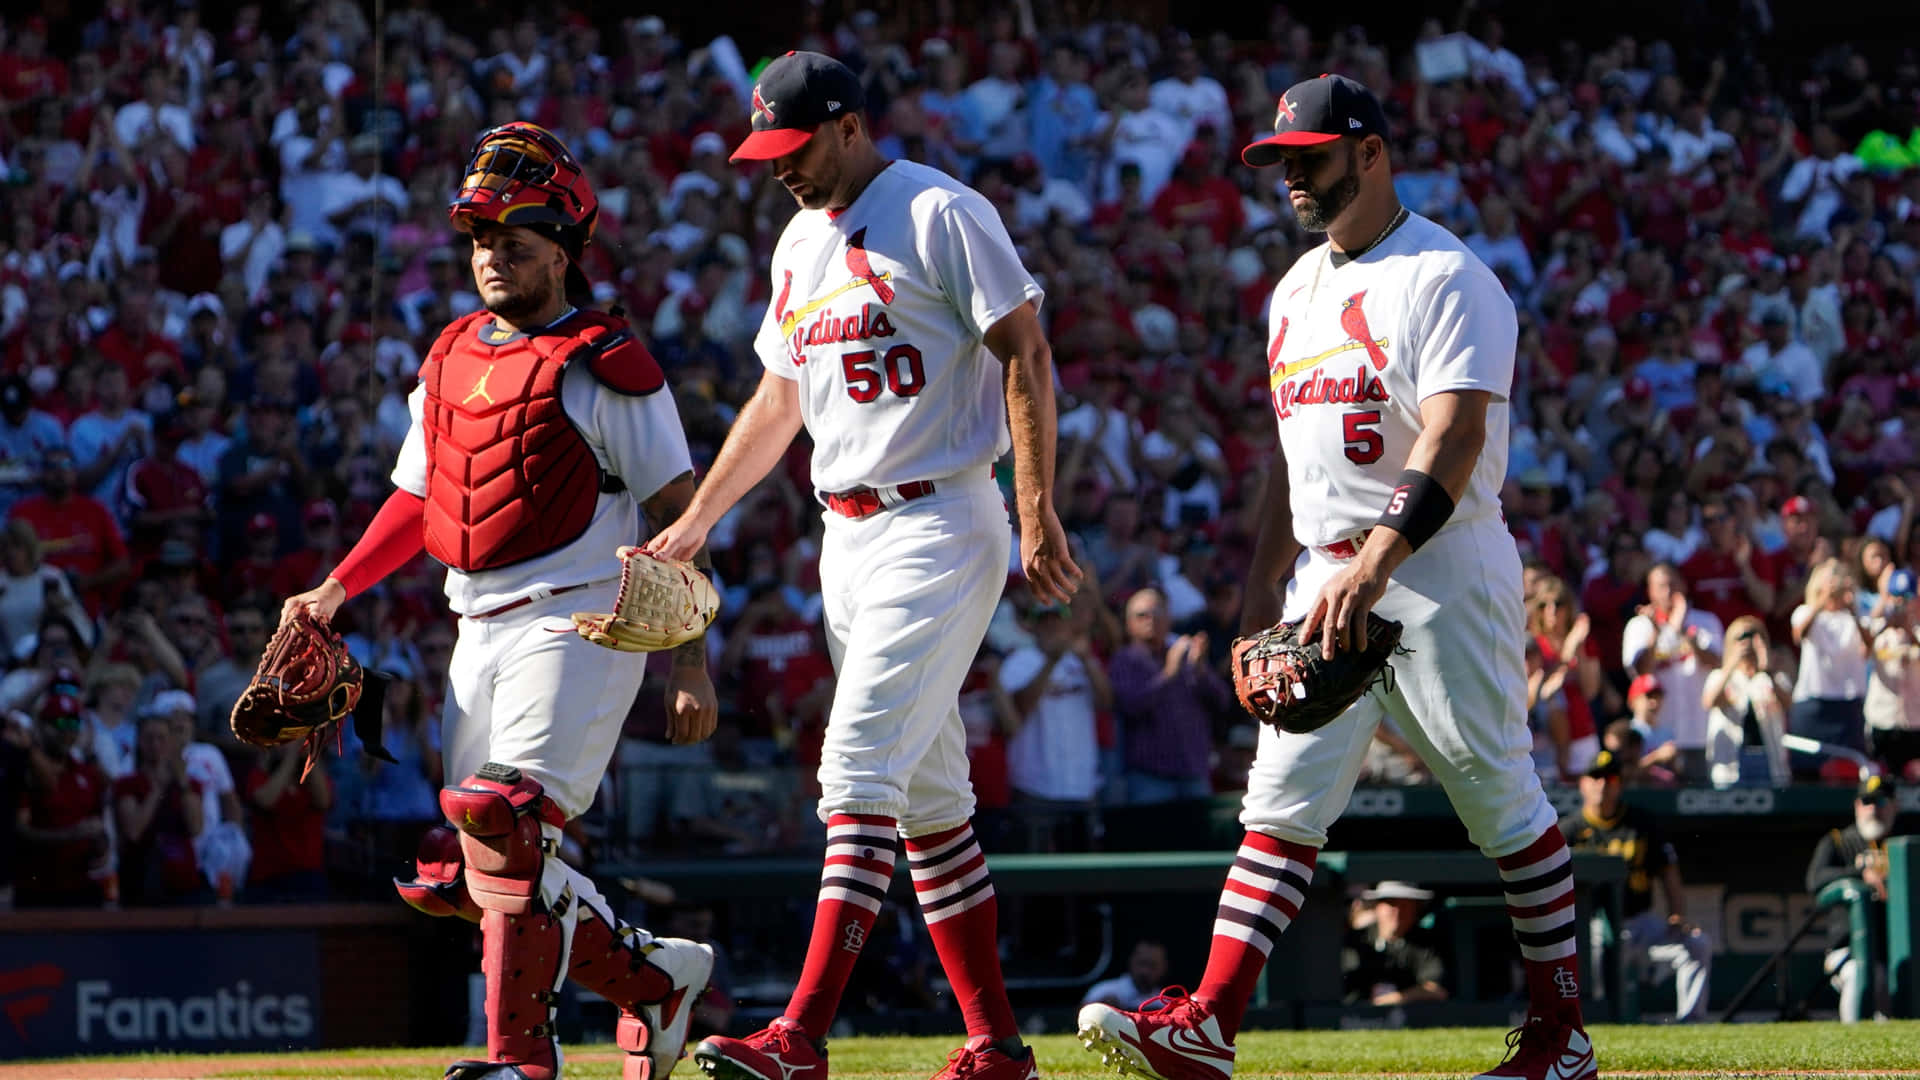 Stlouis Cardinals Baseballspieler Verlassen Das Spielfeld. Wallpaper